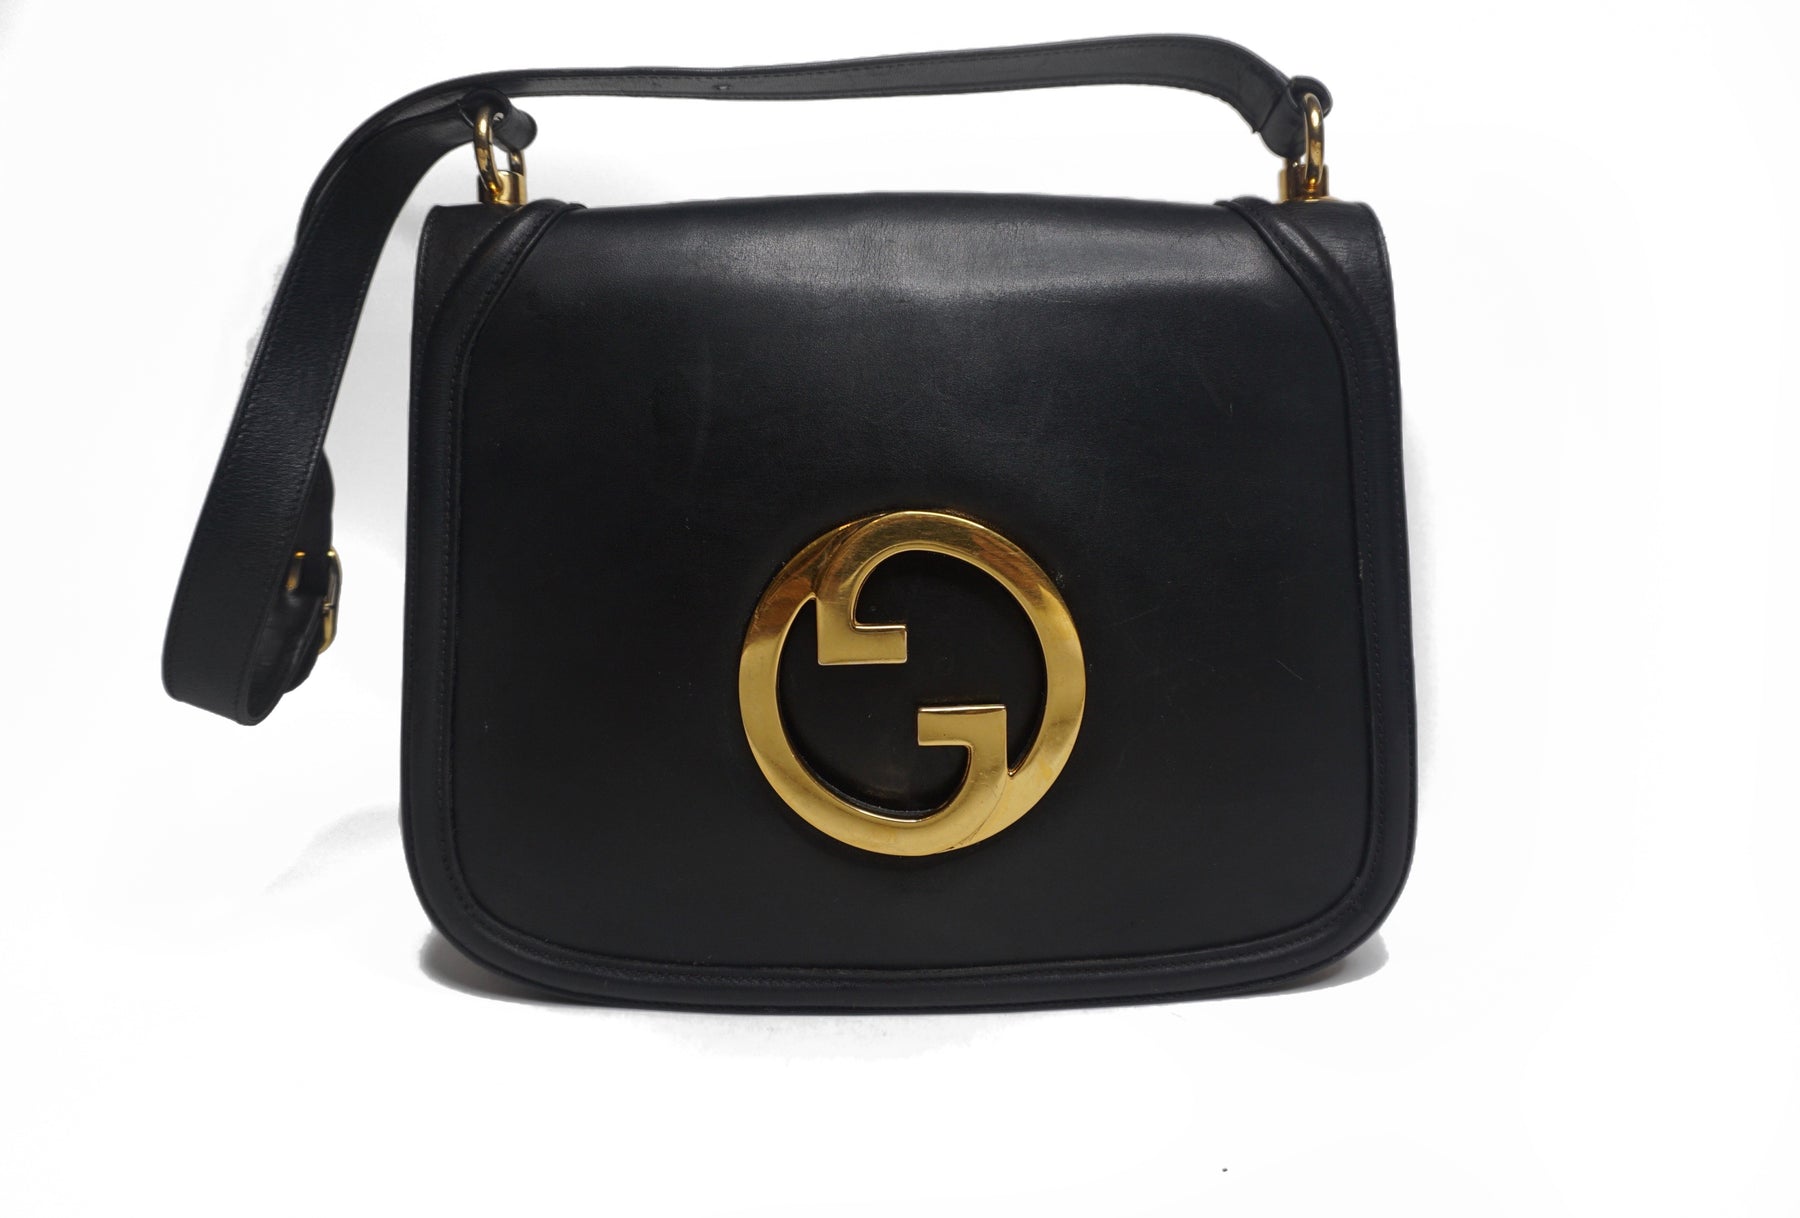 Gucci Blondie medium shoulder bag  Gucci bags outlet, Black gucci